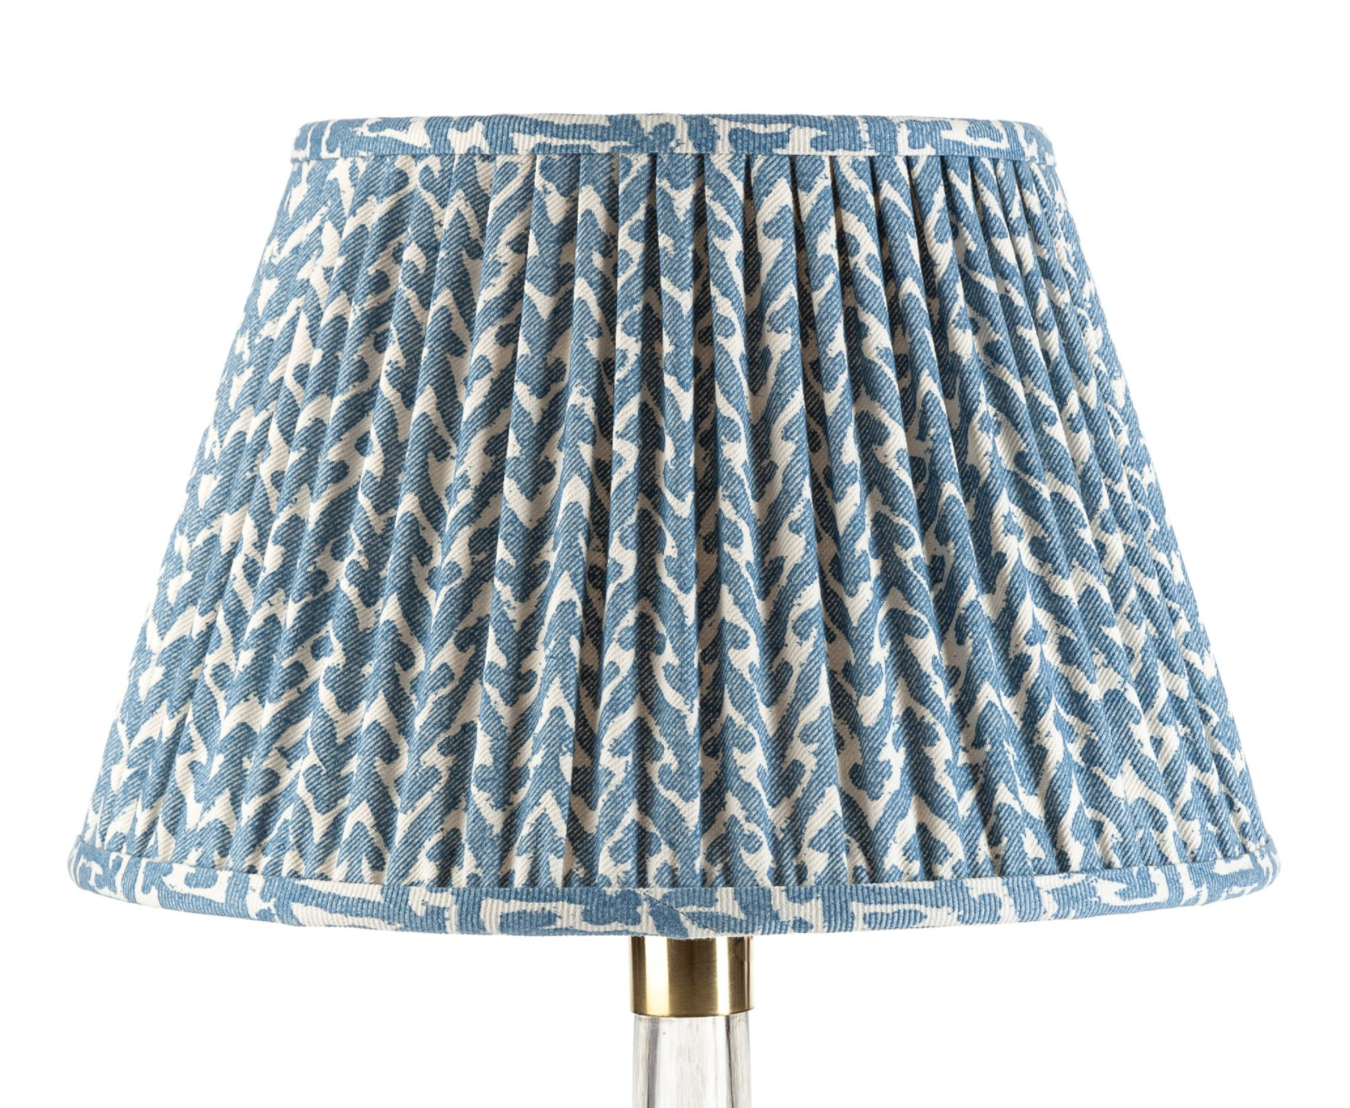 20" Fermoie Lampshade in Blue Rabanna  | Newport Lamp And Shade | Located in Newport, RI